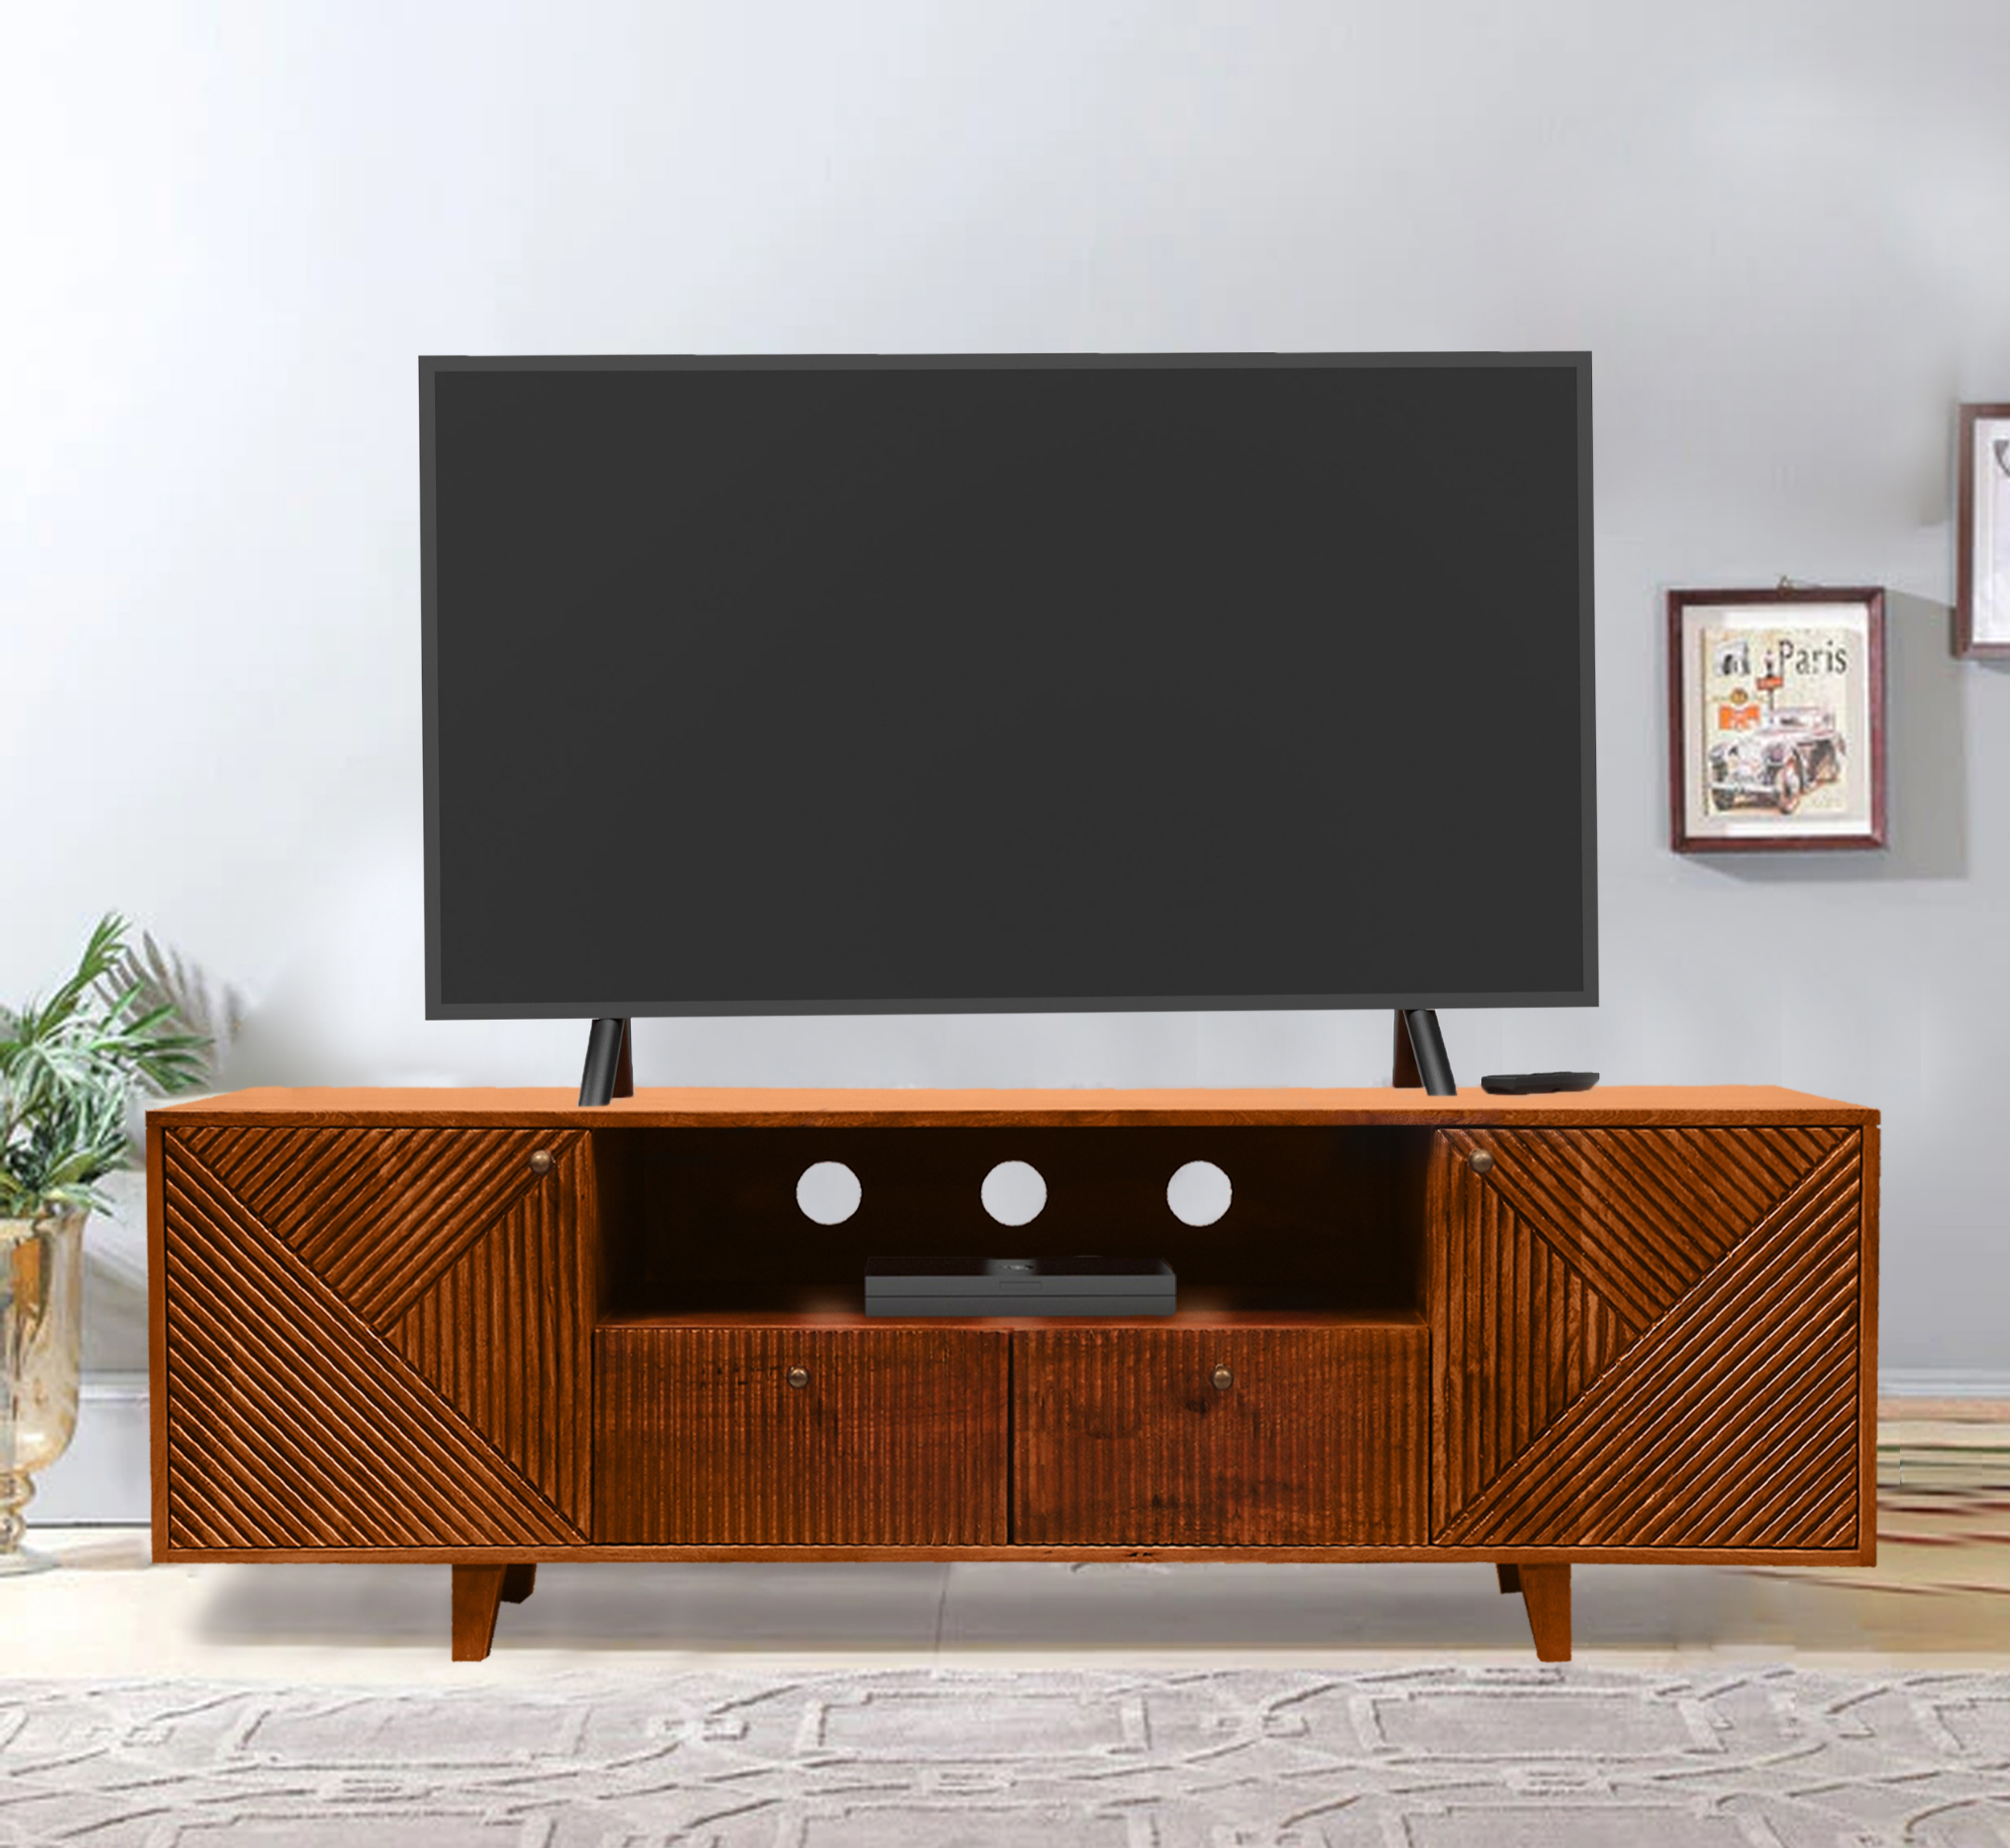 Modern Tv Cabinet in the Modern Living Room Stock Image - Image of  household, inside: 148410429